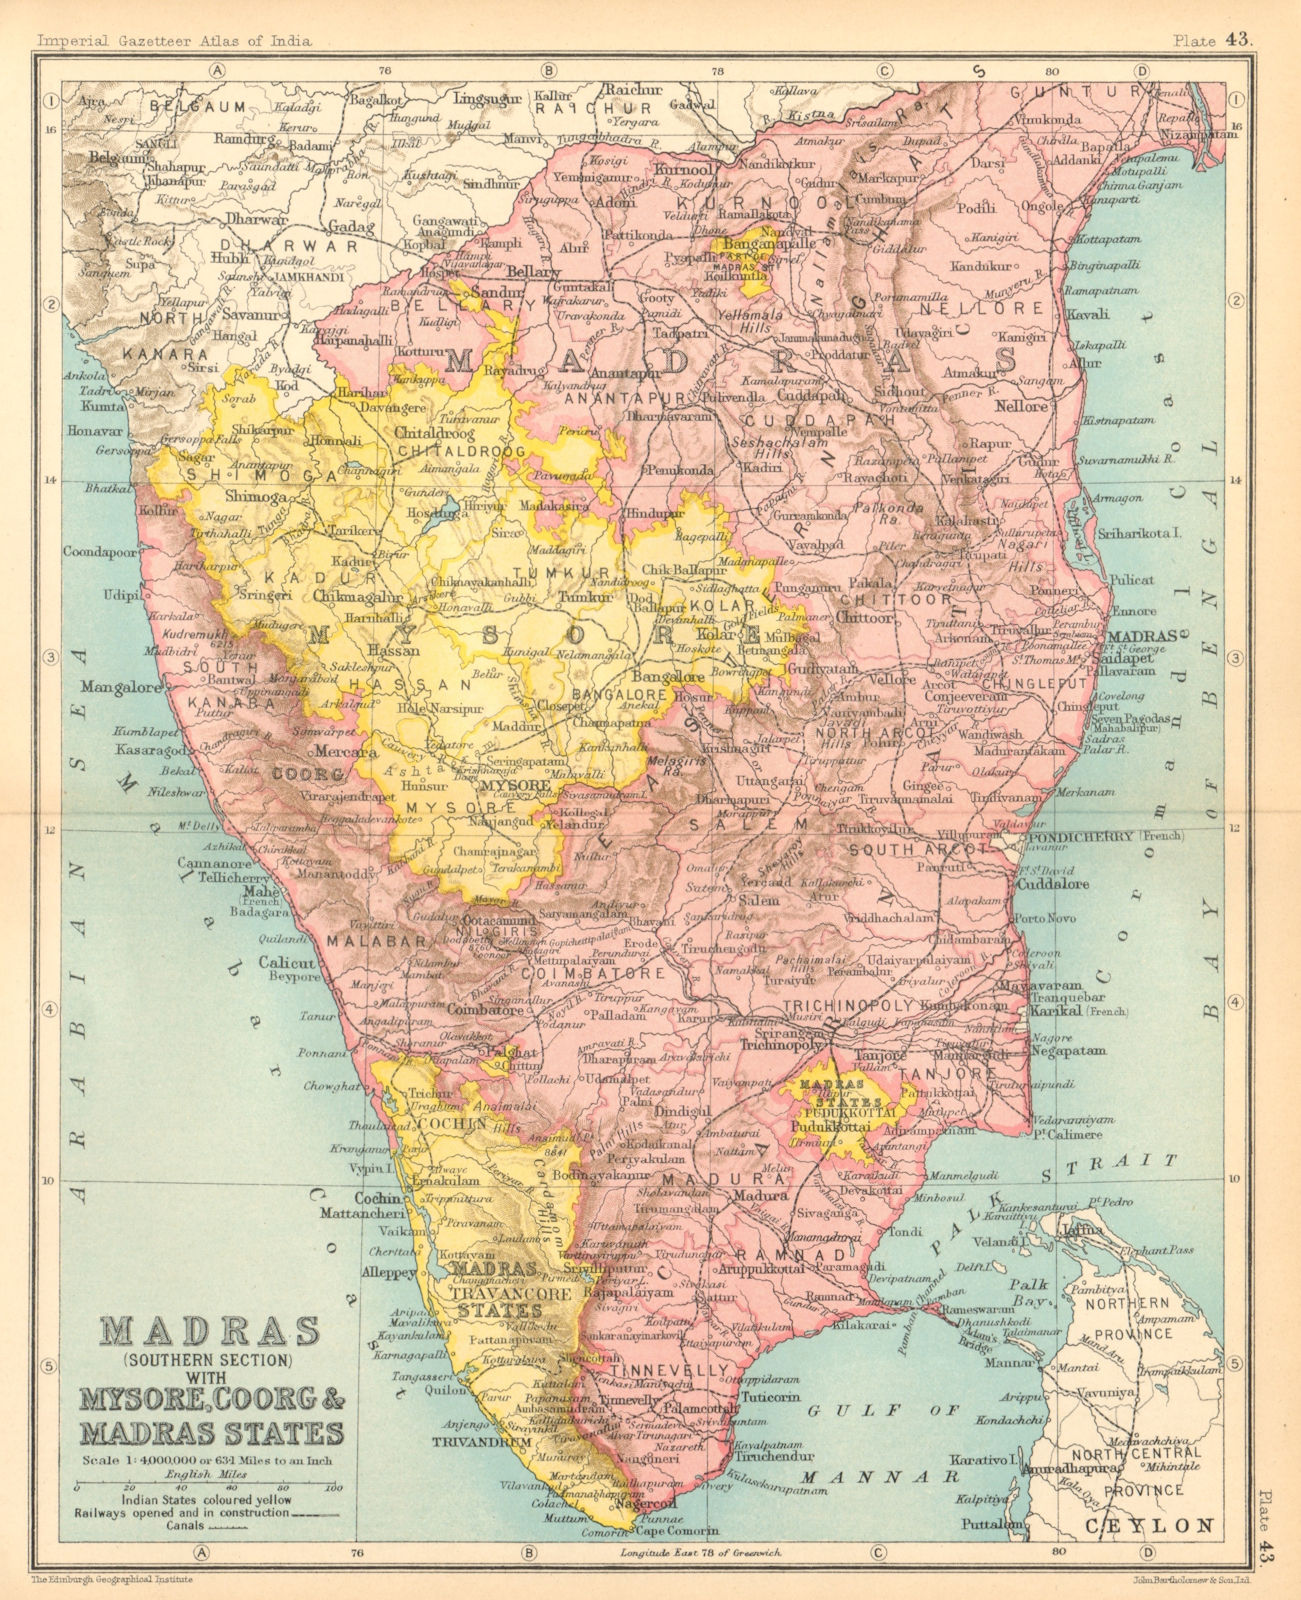 Mysore, Coorg & Madras states'. South British India. Kerala Tamil Nadu 1931 map